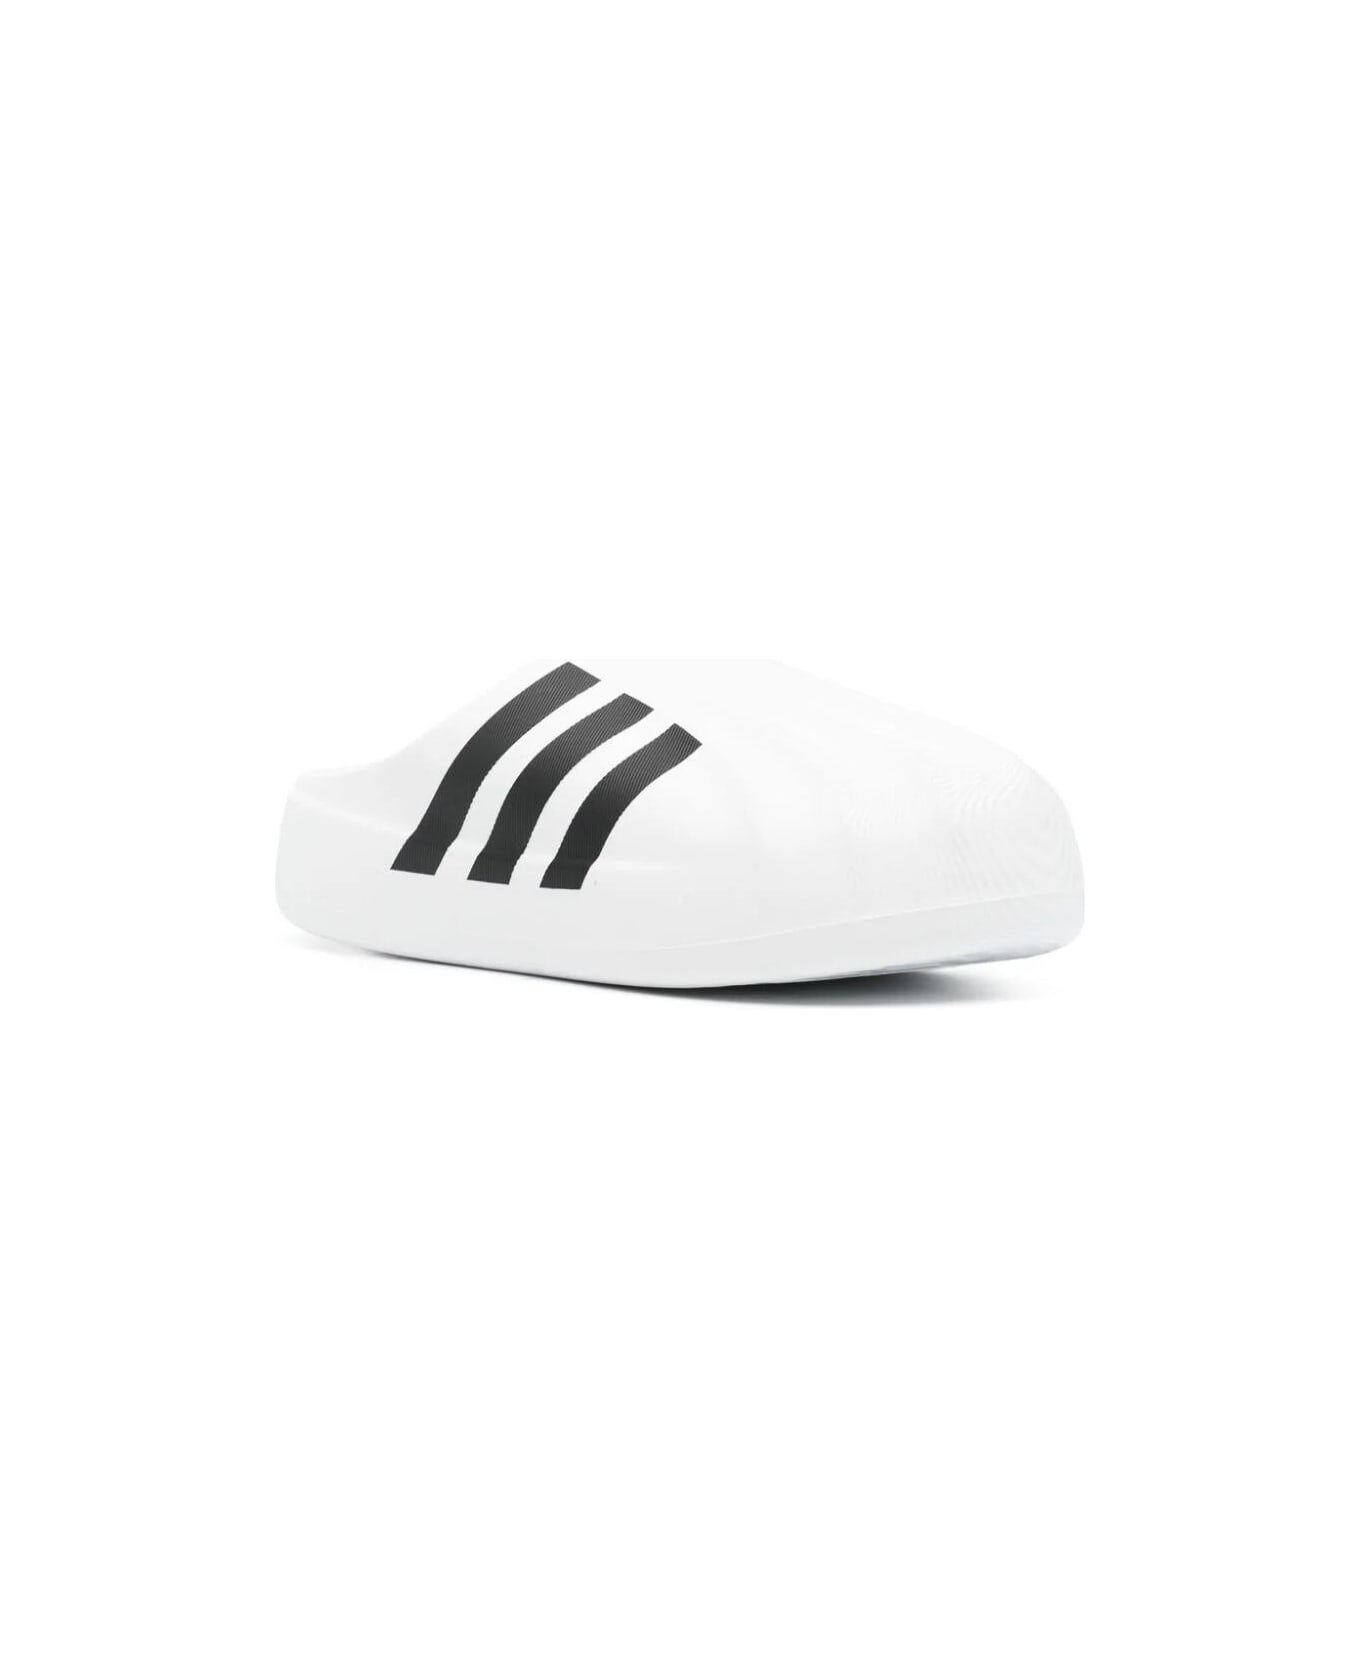 Adidas Adifom Superstar Mu Sneakers - Ftwwht Cblack Ftwwht